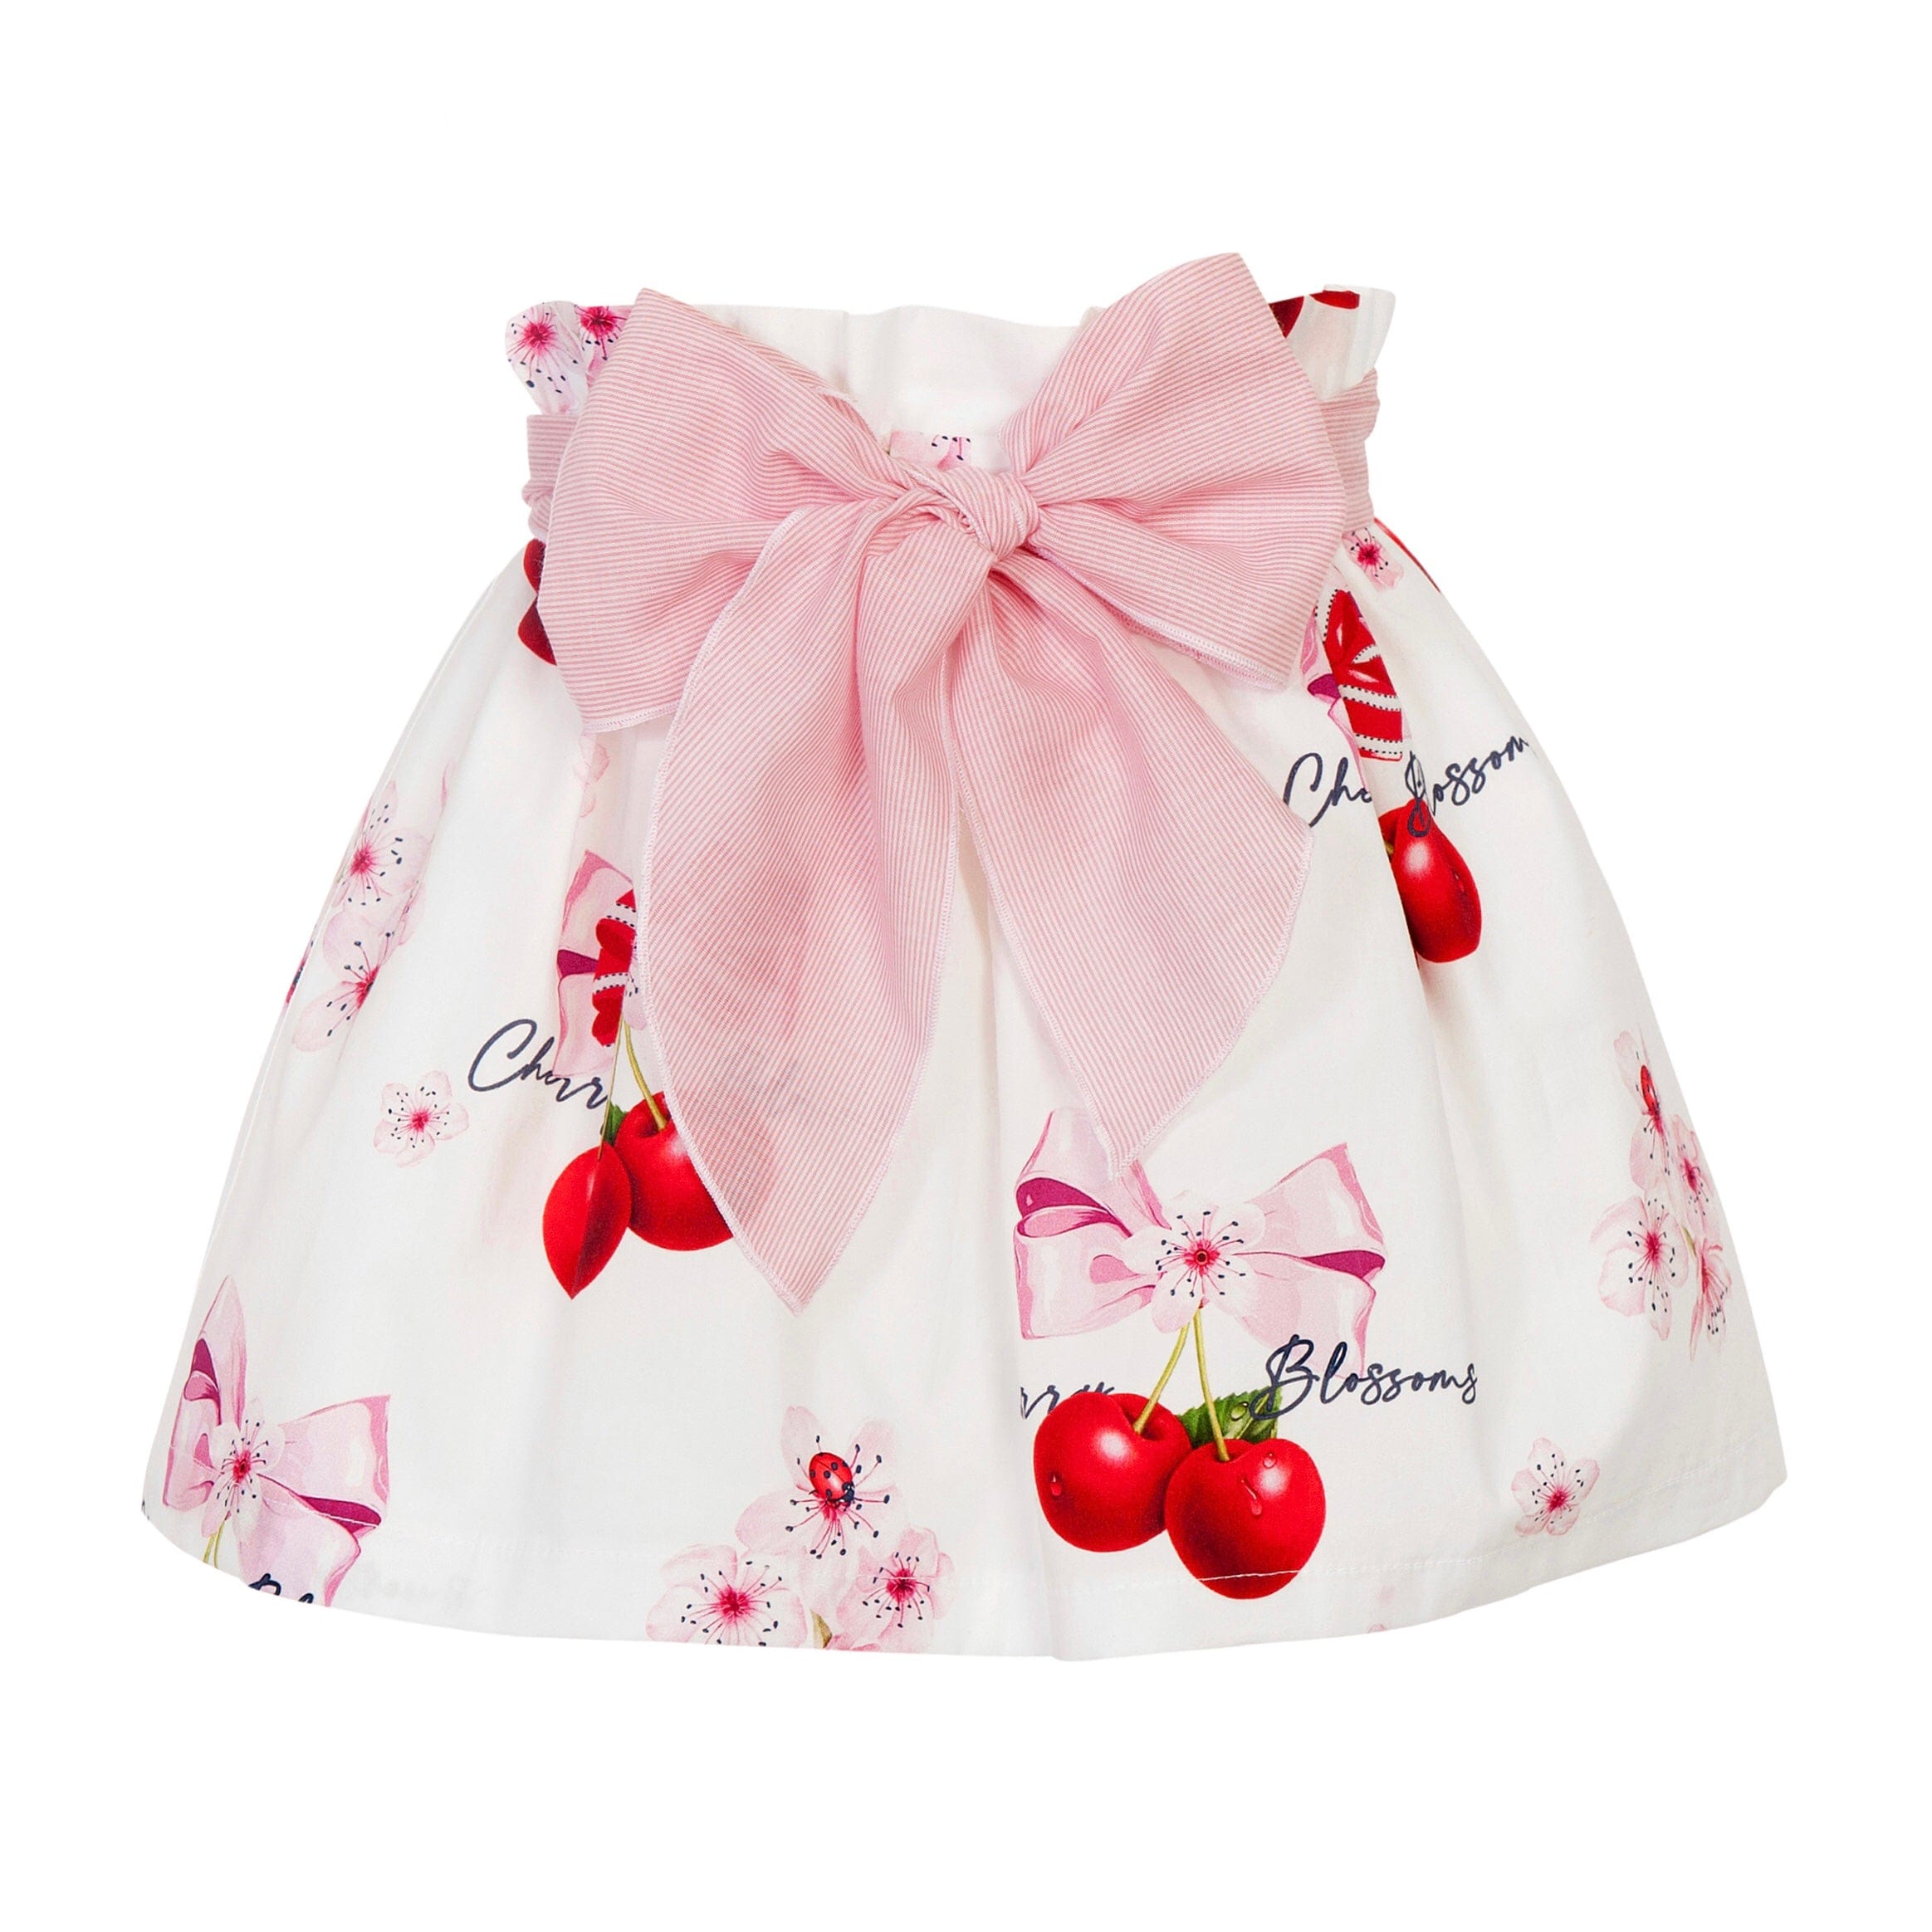 BALLOON CHIC - Cherry Bow Skirt Set - White